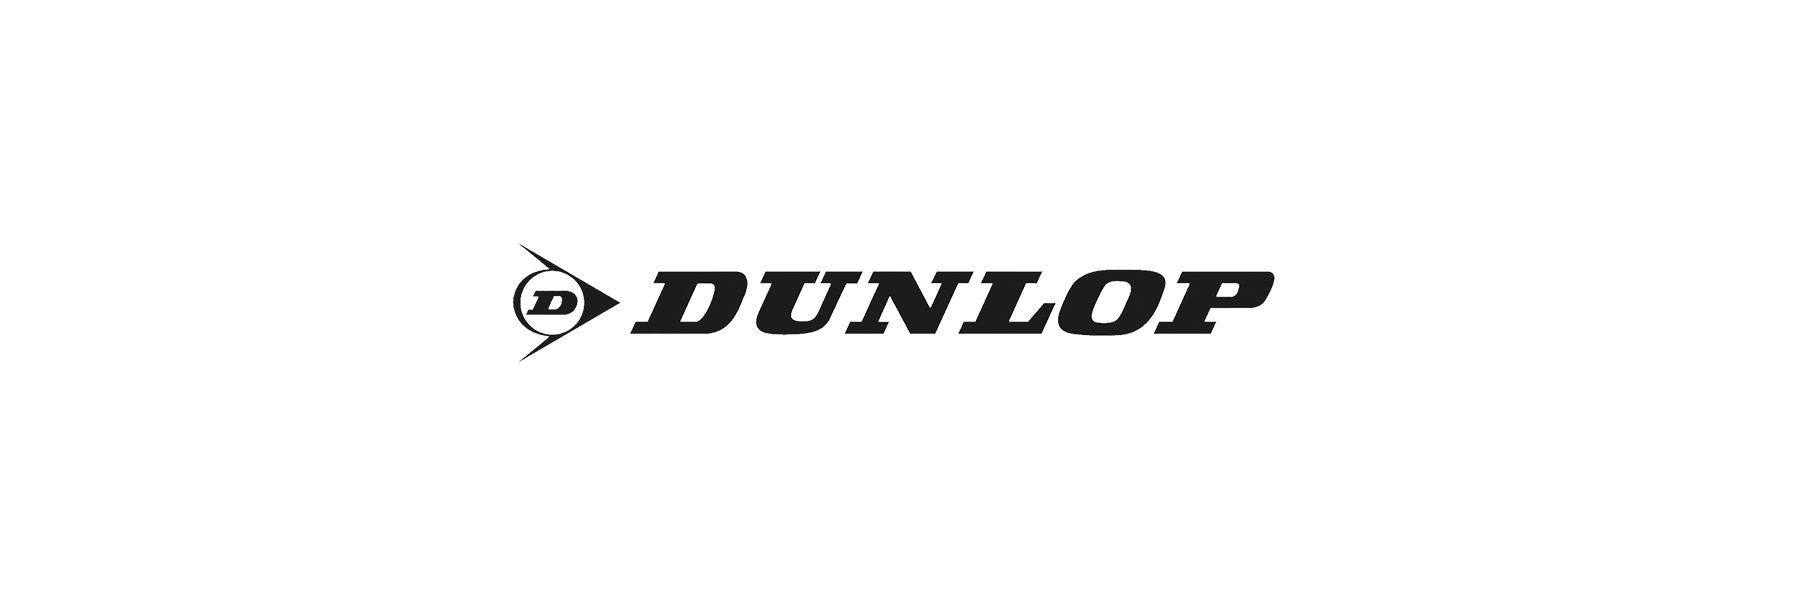 Protezione Marchi-registro Dunlop Deutz mehlich Marrone Beck Faks SPORT 447 incorniciato 